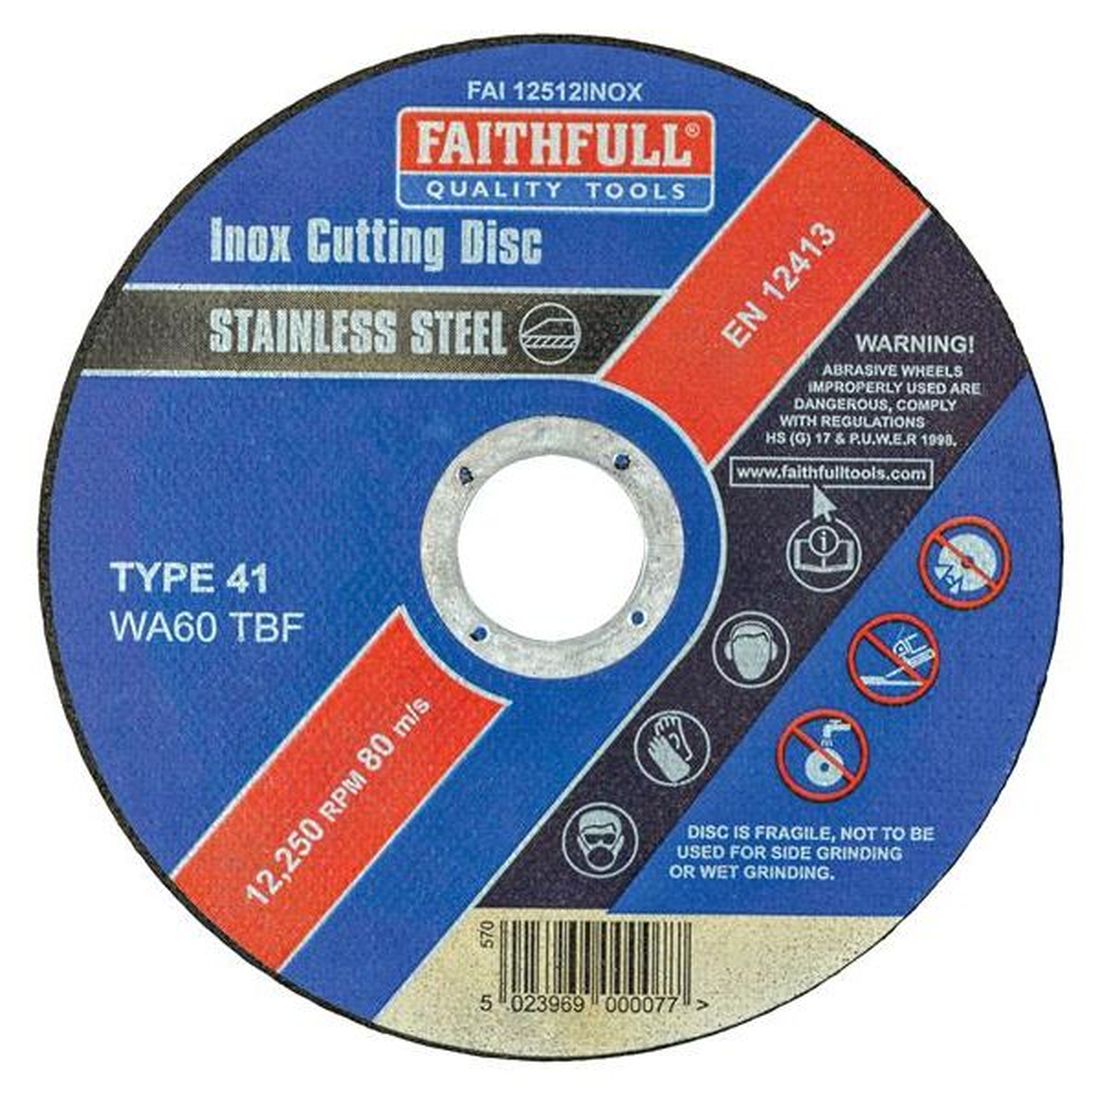 Faithfull Inox Cutting Disc 115 x 1.2 x 22.23mm                                           